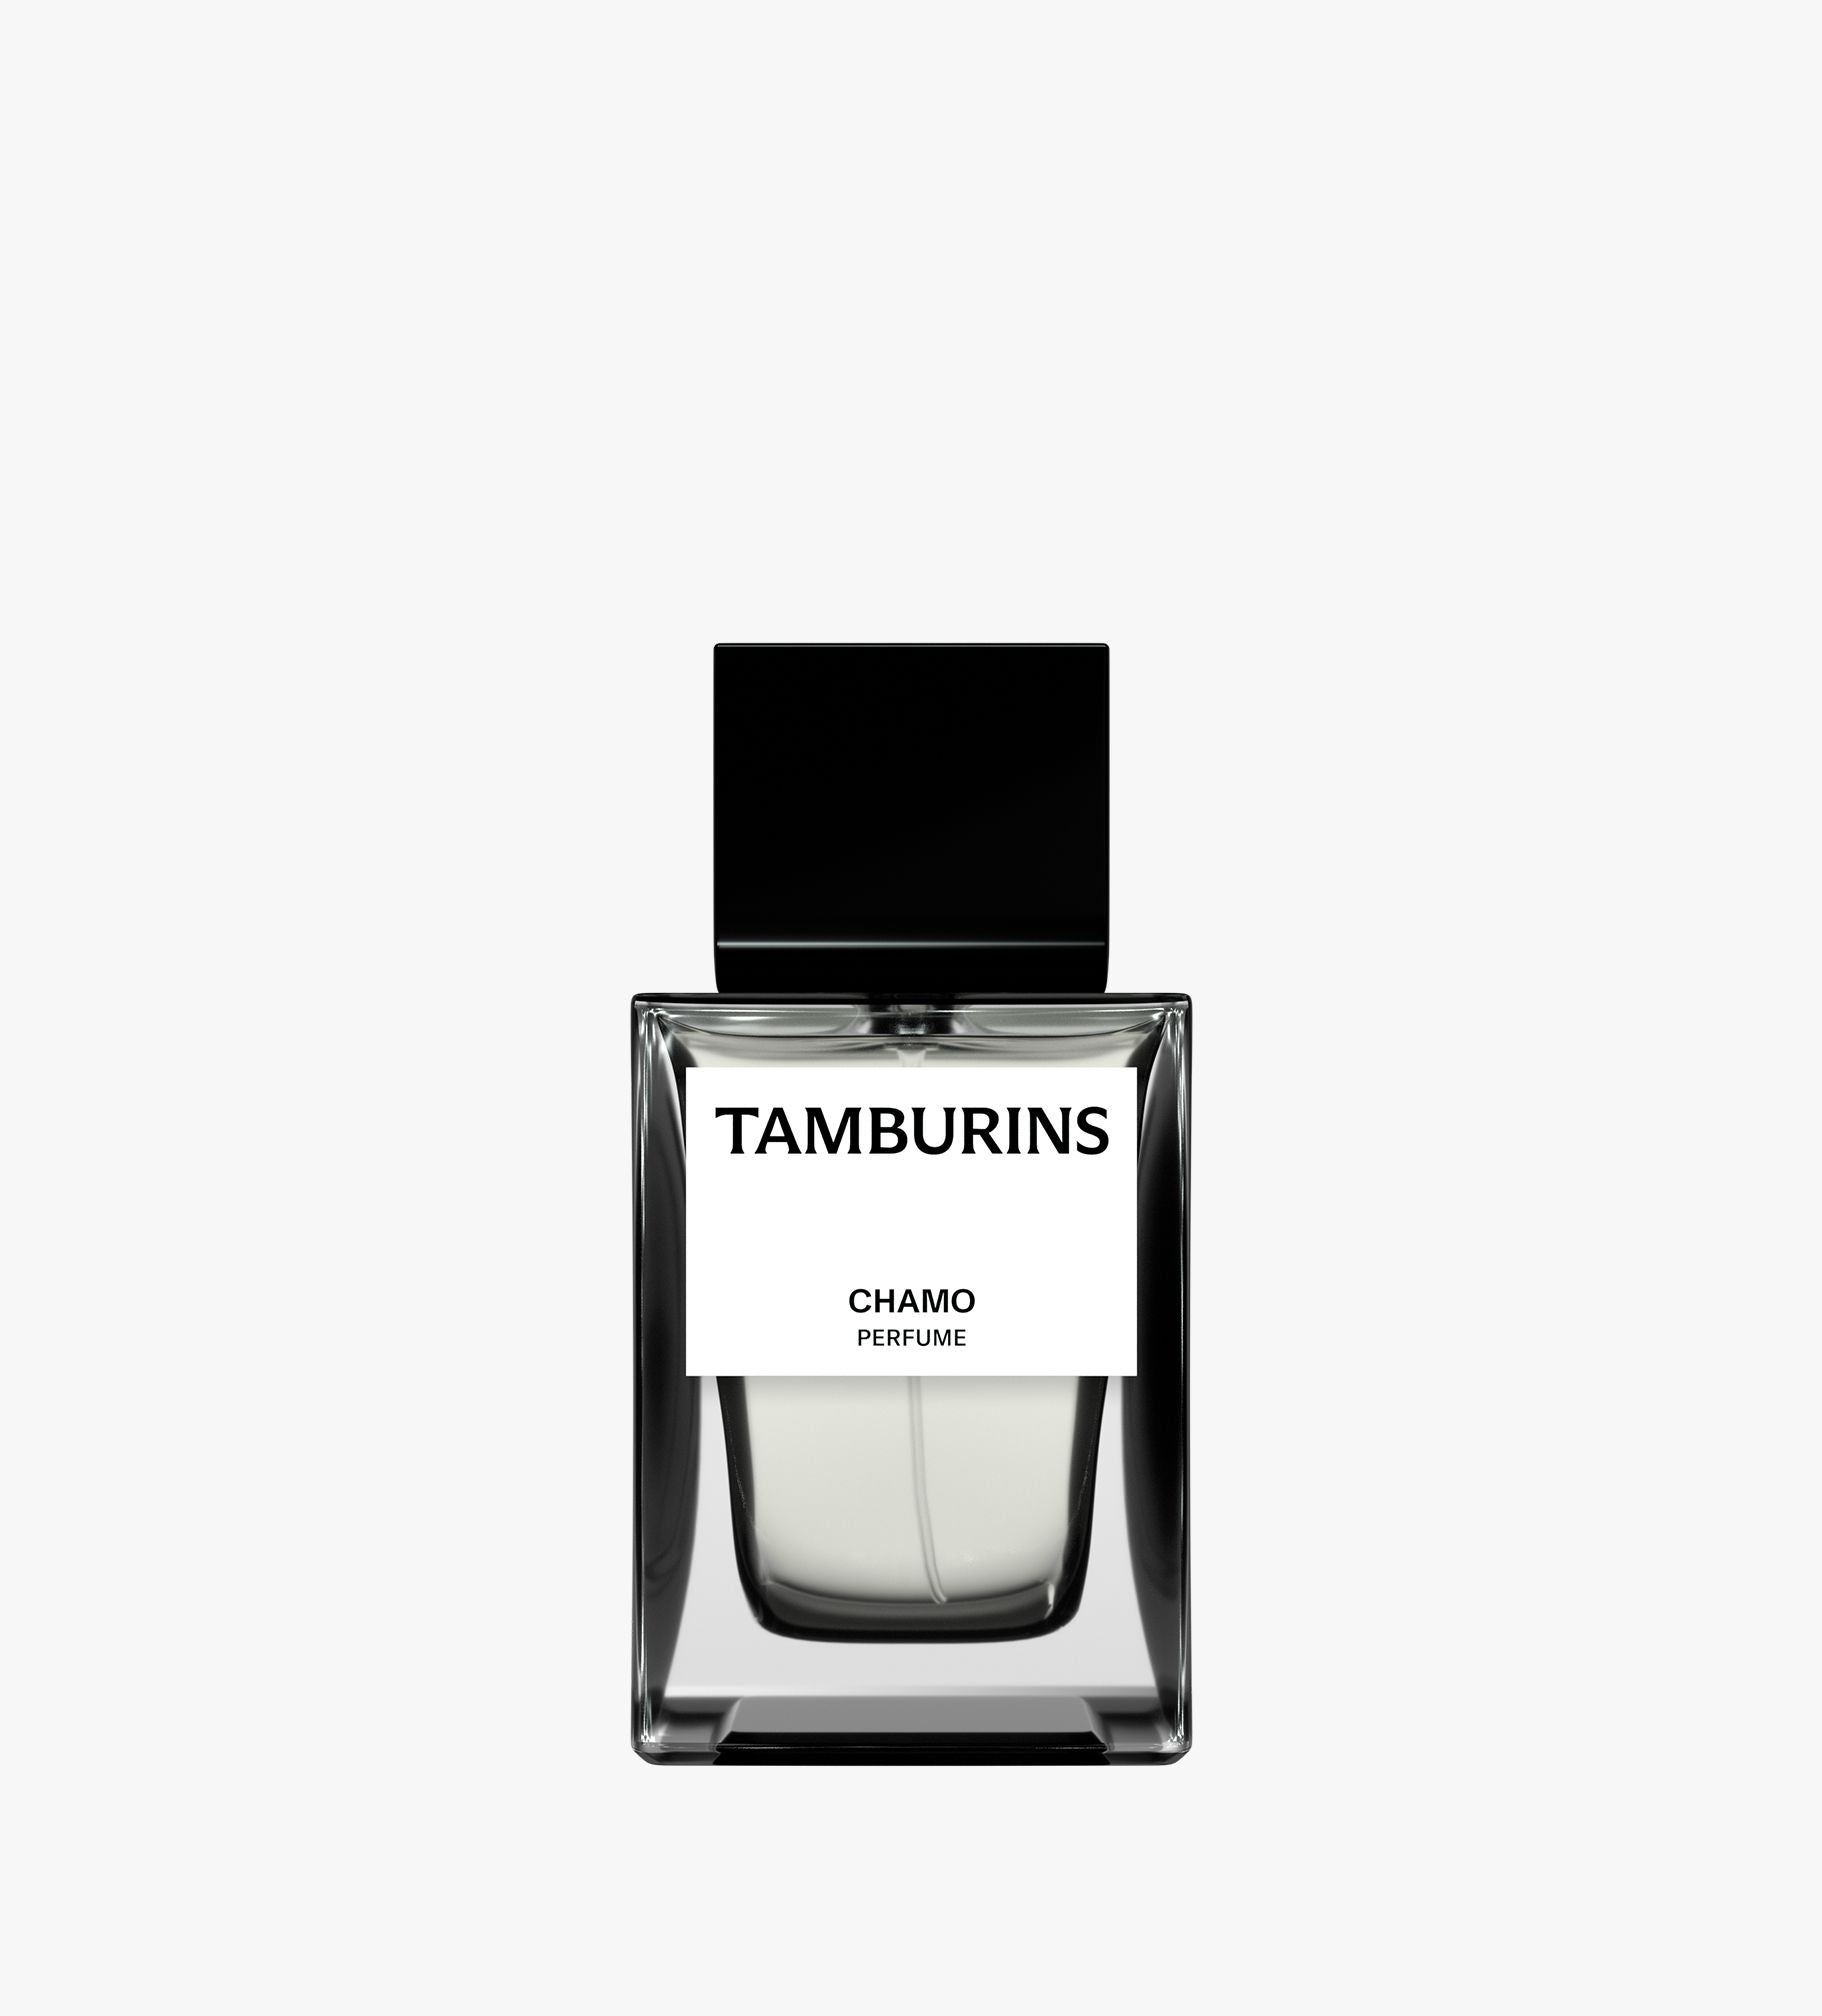 11ml / 50ml TAMBURINS Perfume in #Chamo fragrance, elegant and compact design.